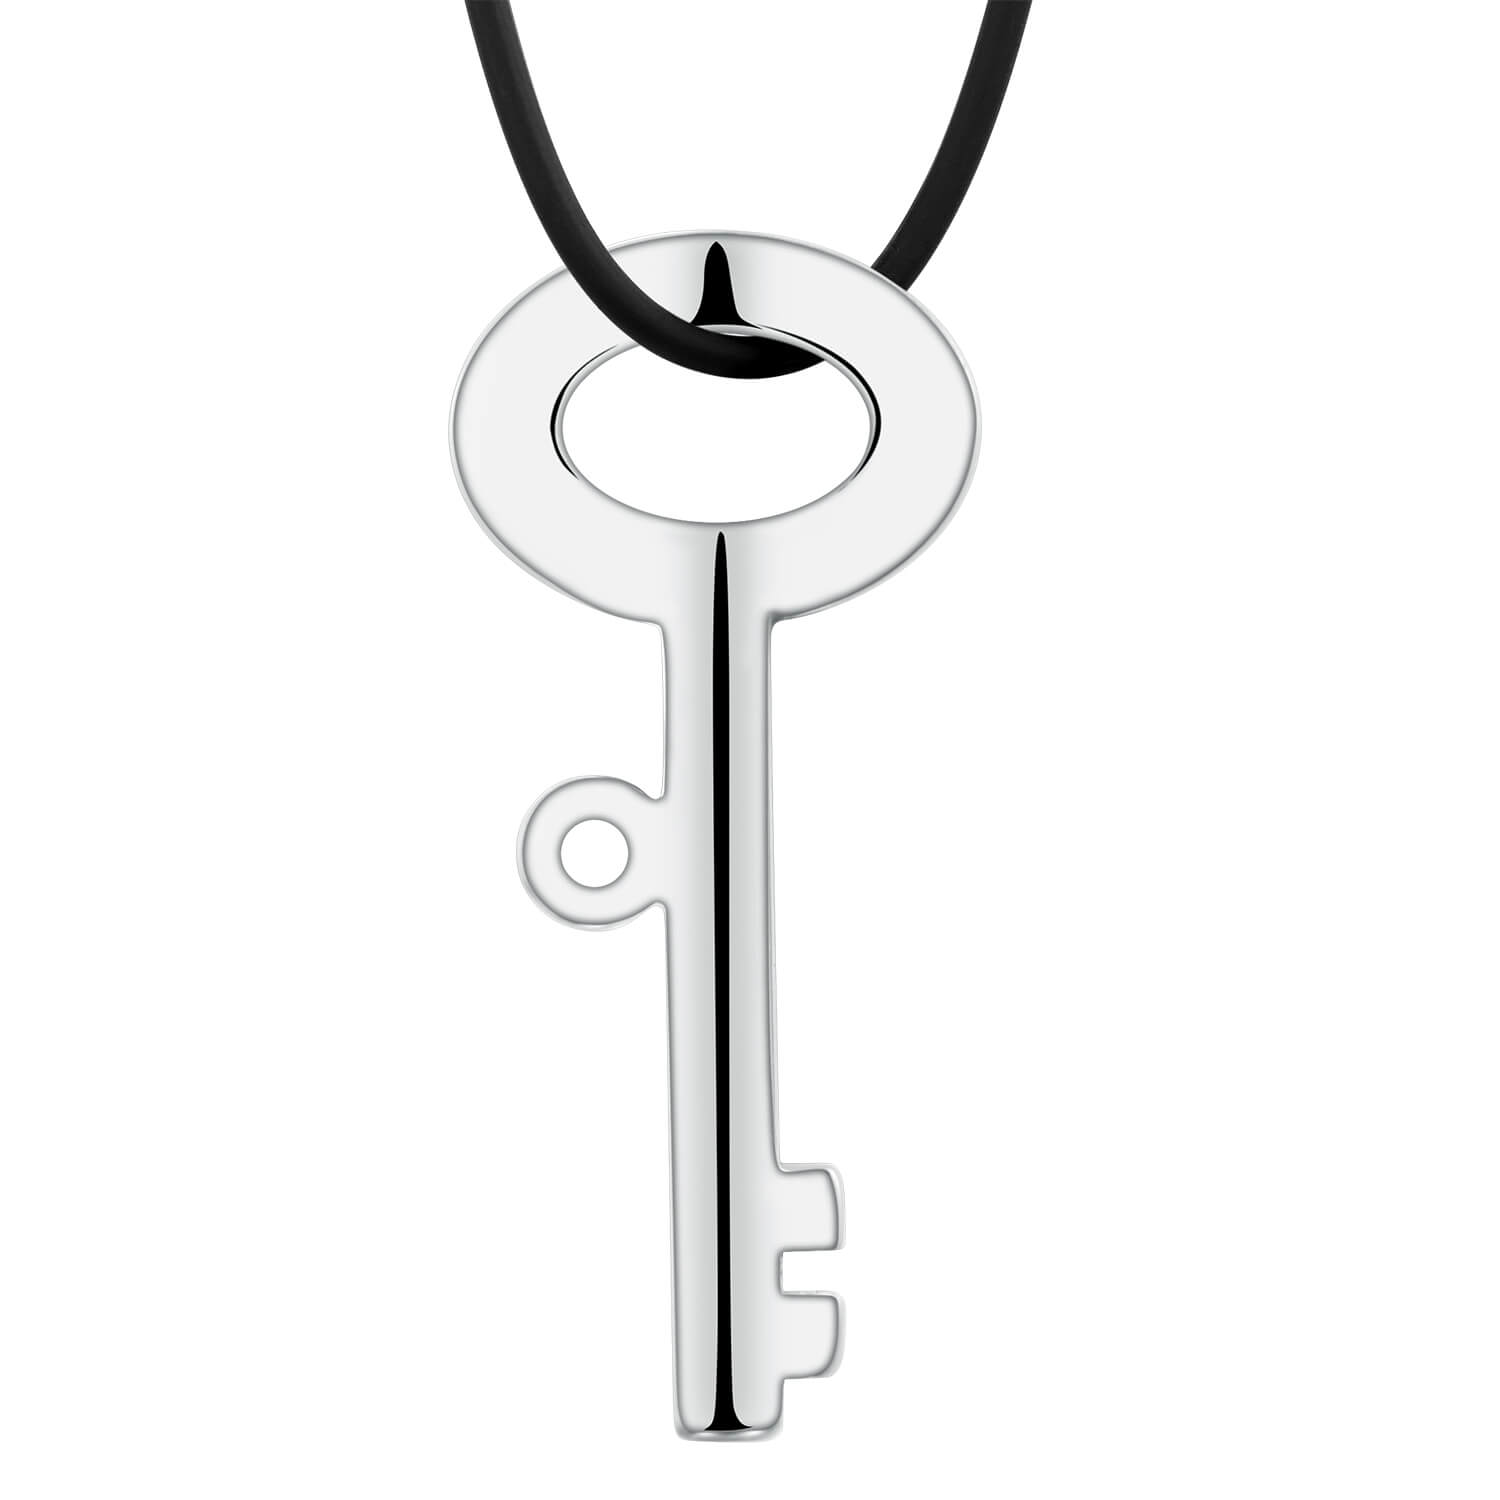 Опен ключи. Кулон ключ. Подвеска ключик. Ключик Тиффани. Ожерелье с ключом.